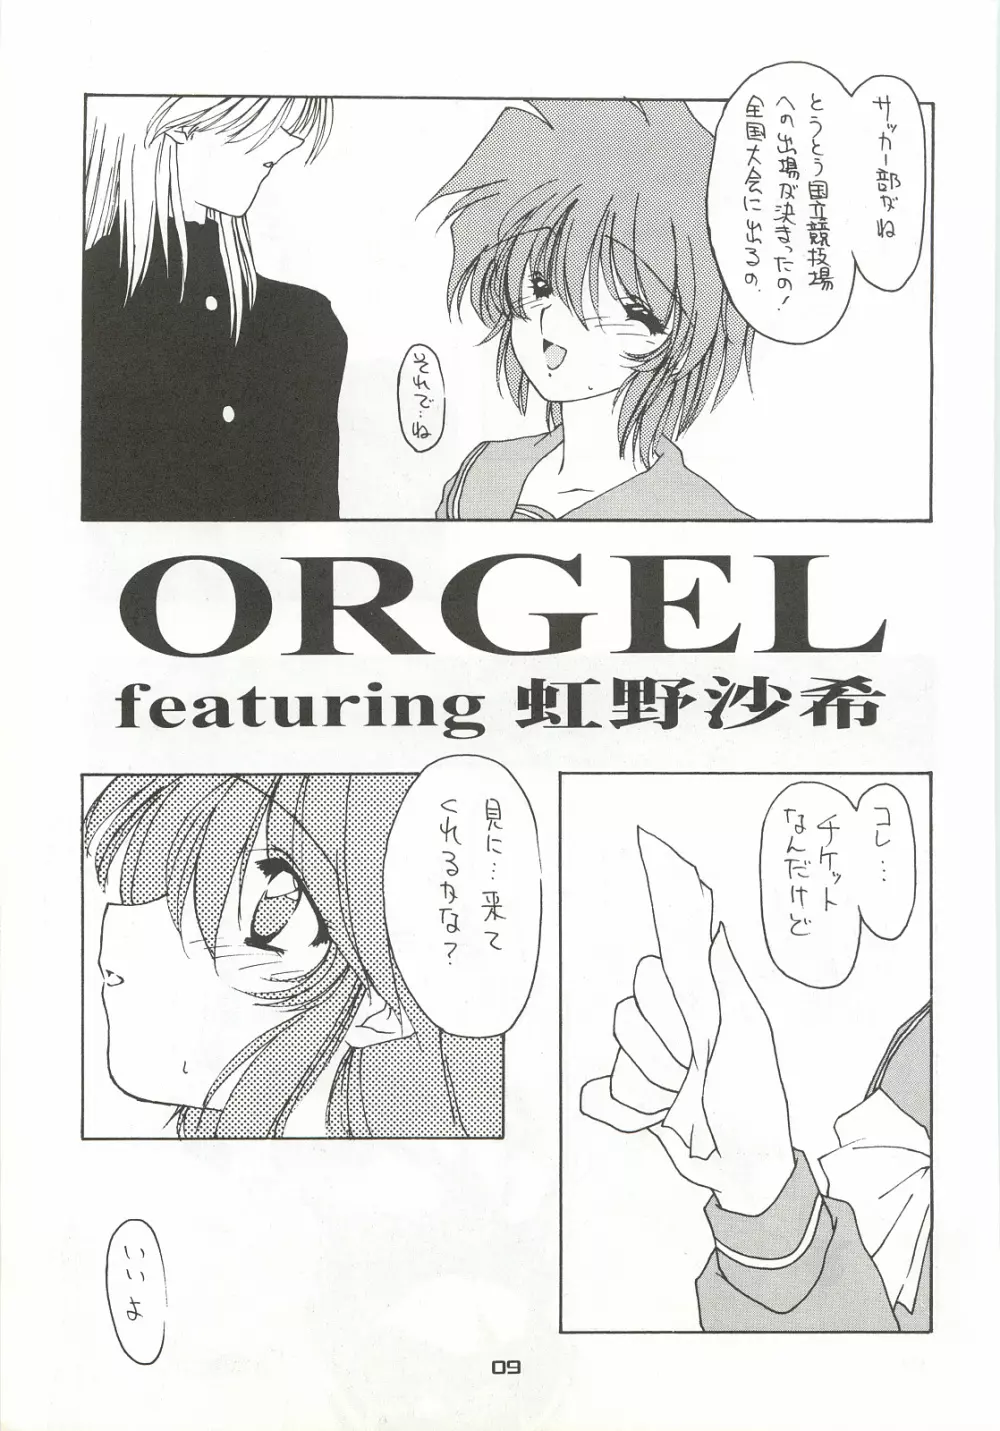 ORGEL4 featuring 虹野沙希 8ページ